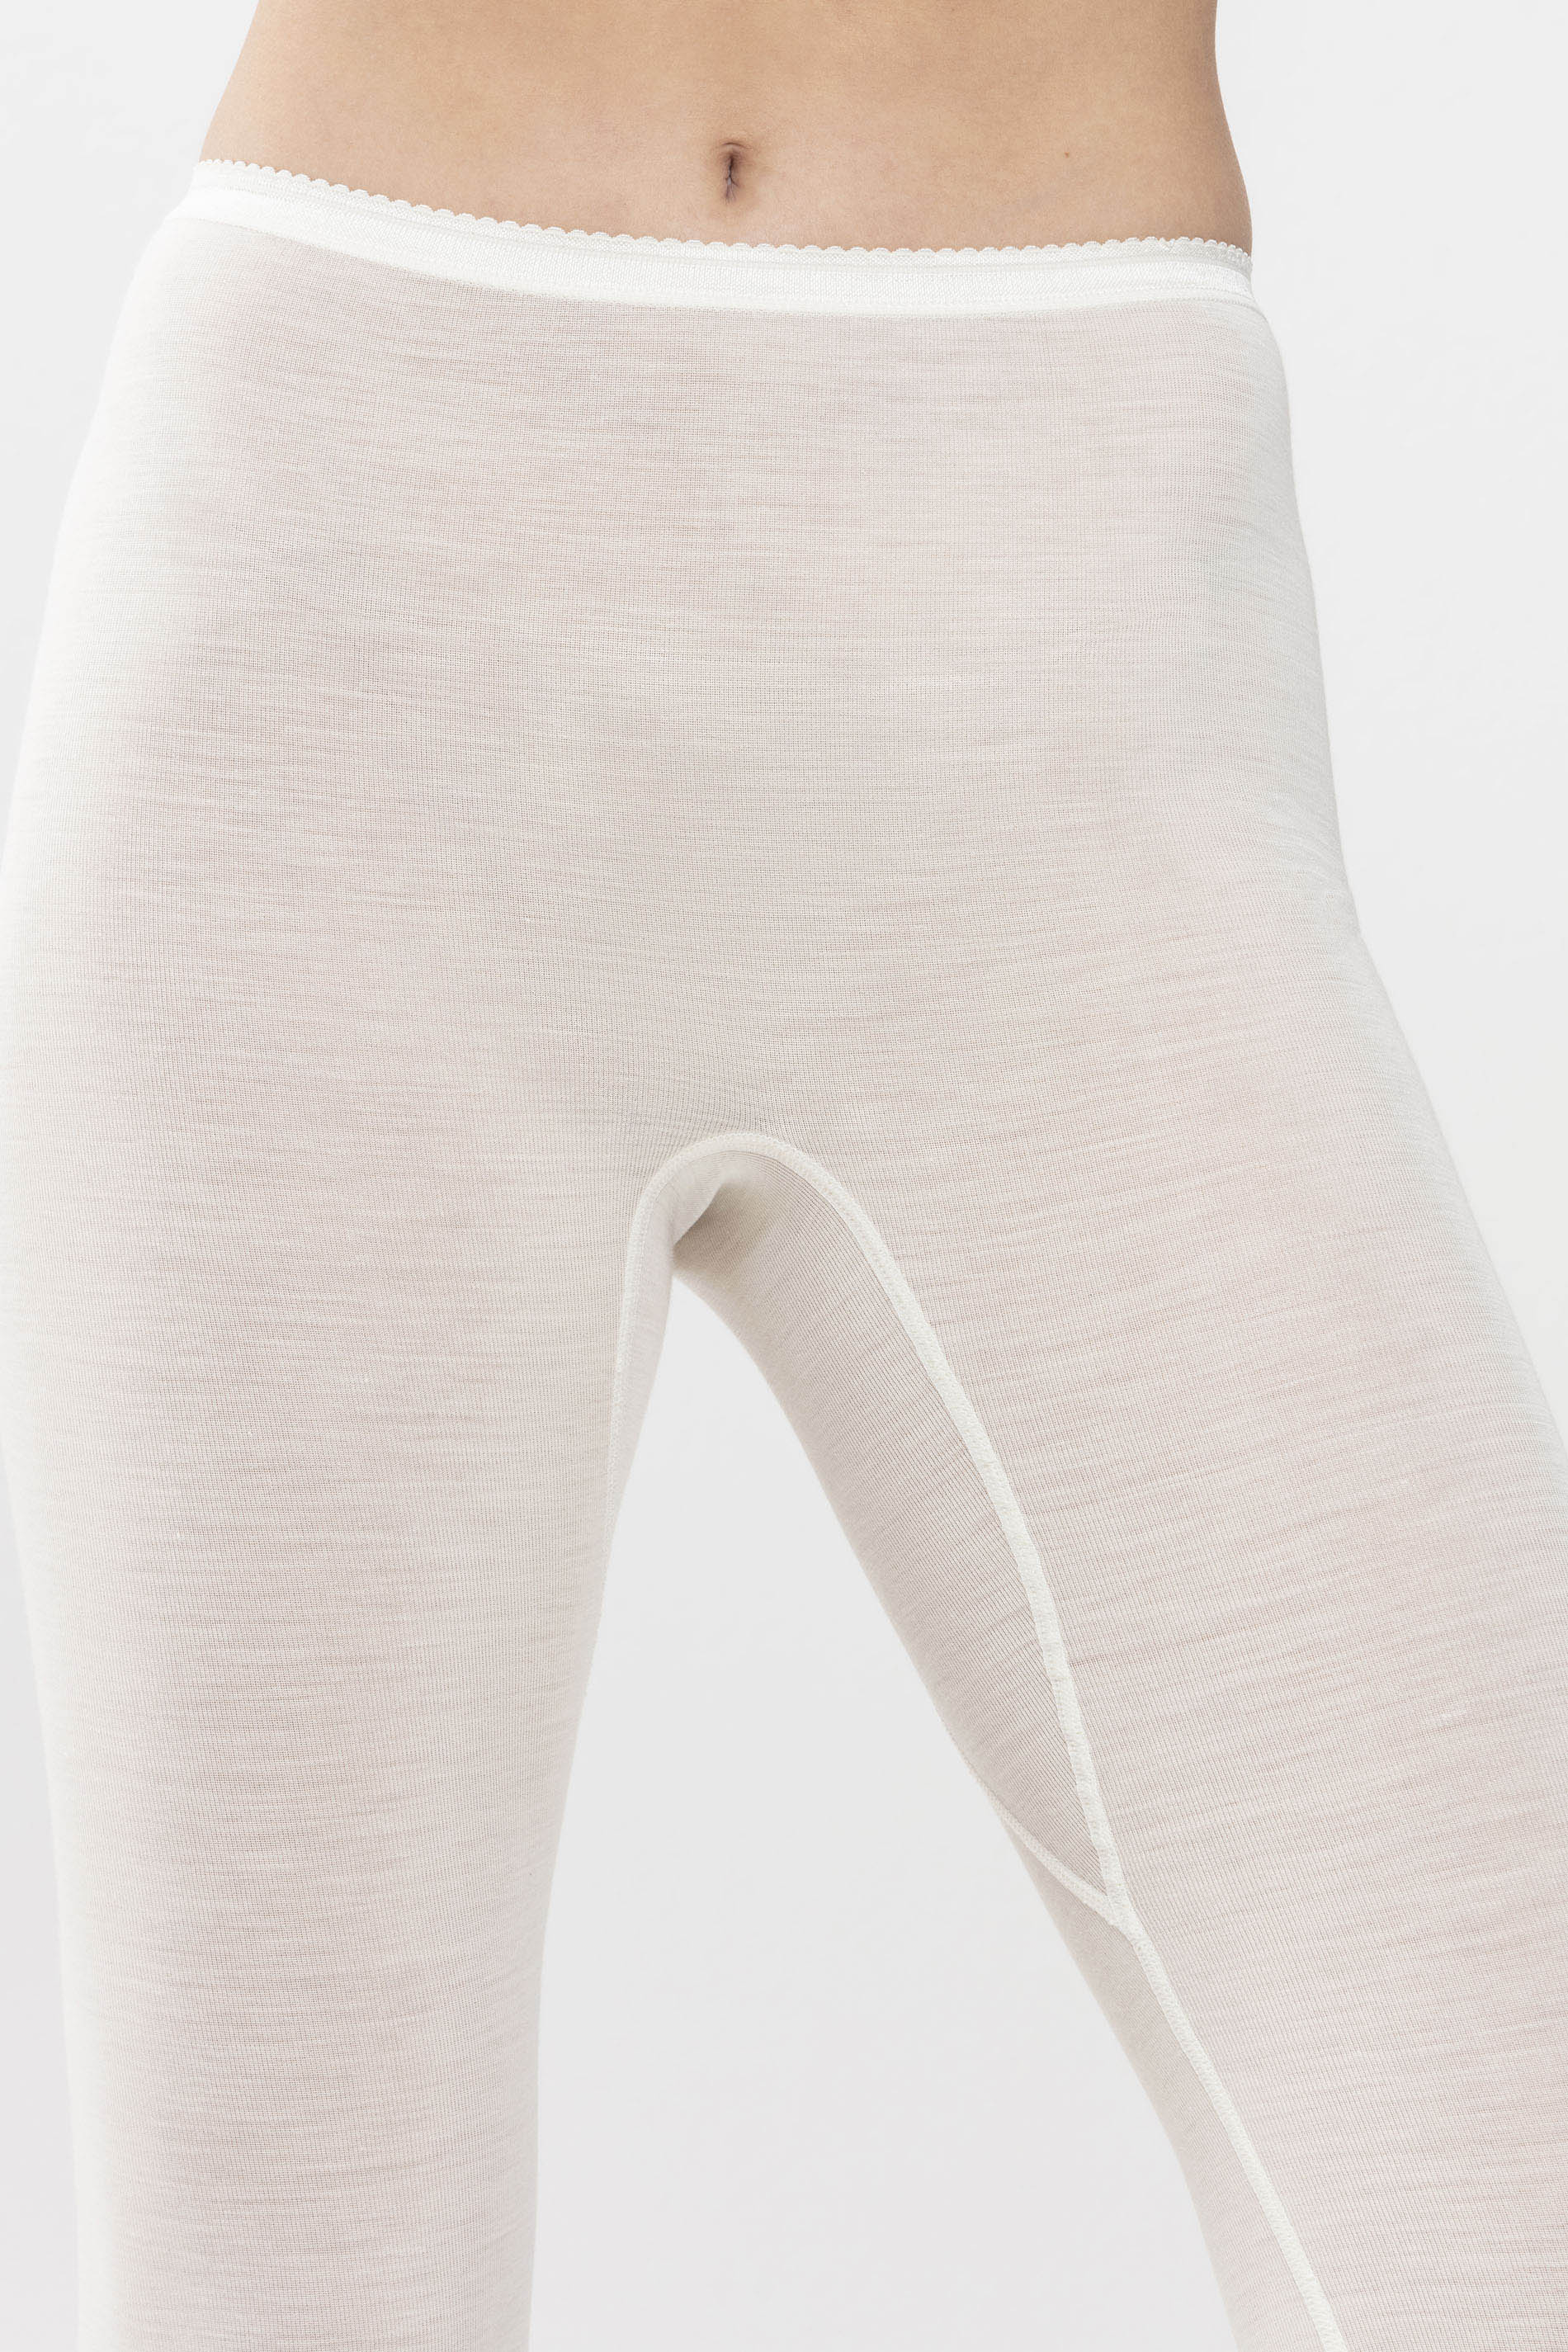 Leggings Wit Serie Exquisite Detailweergave 01 | mey®